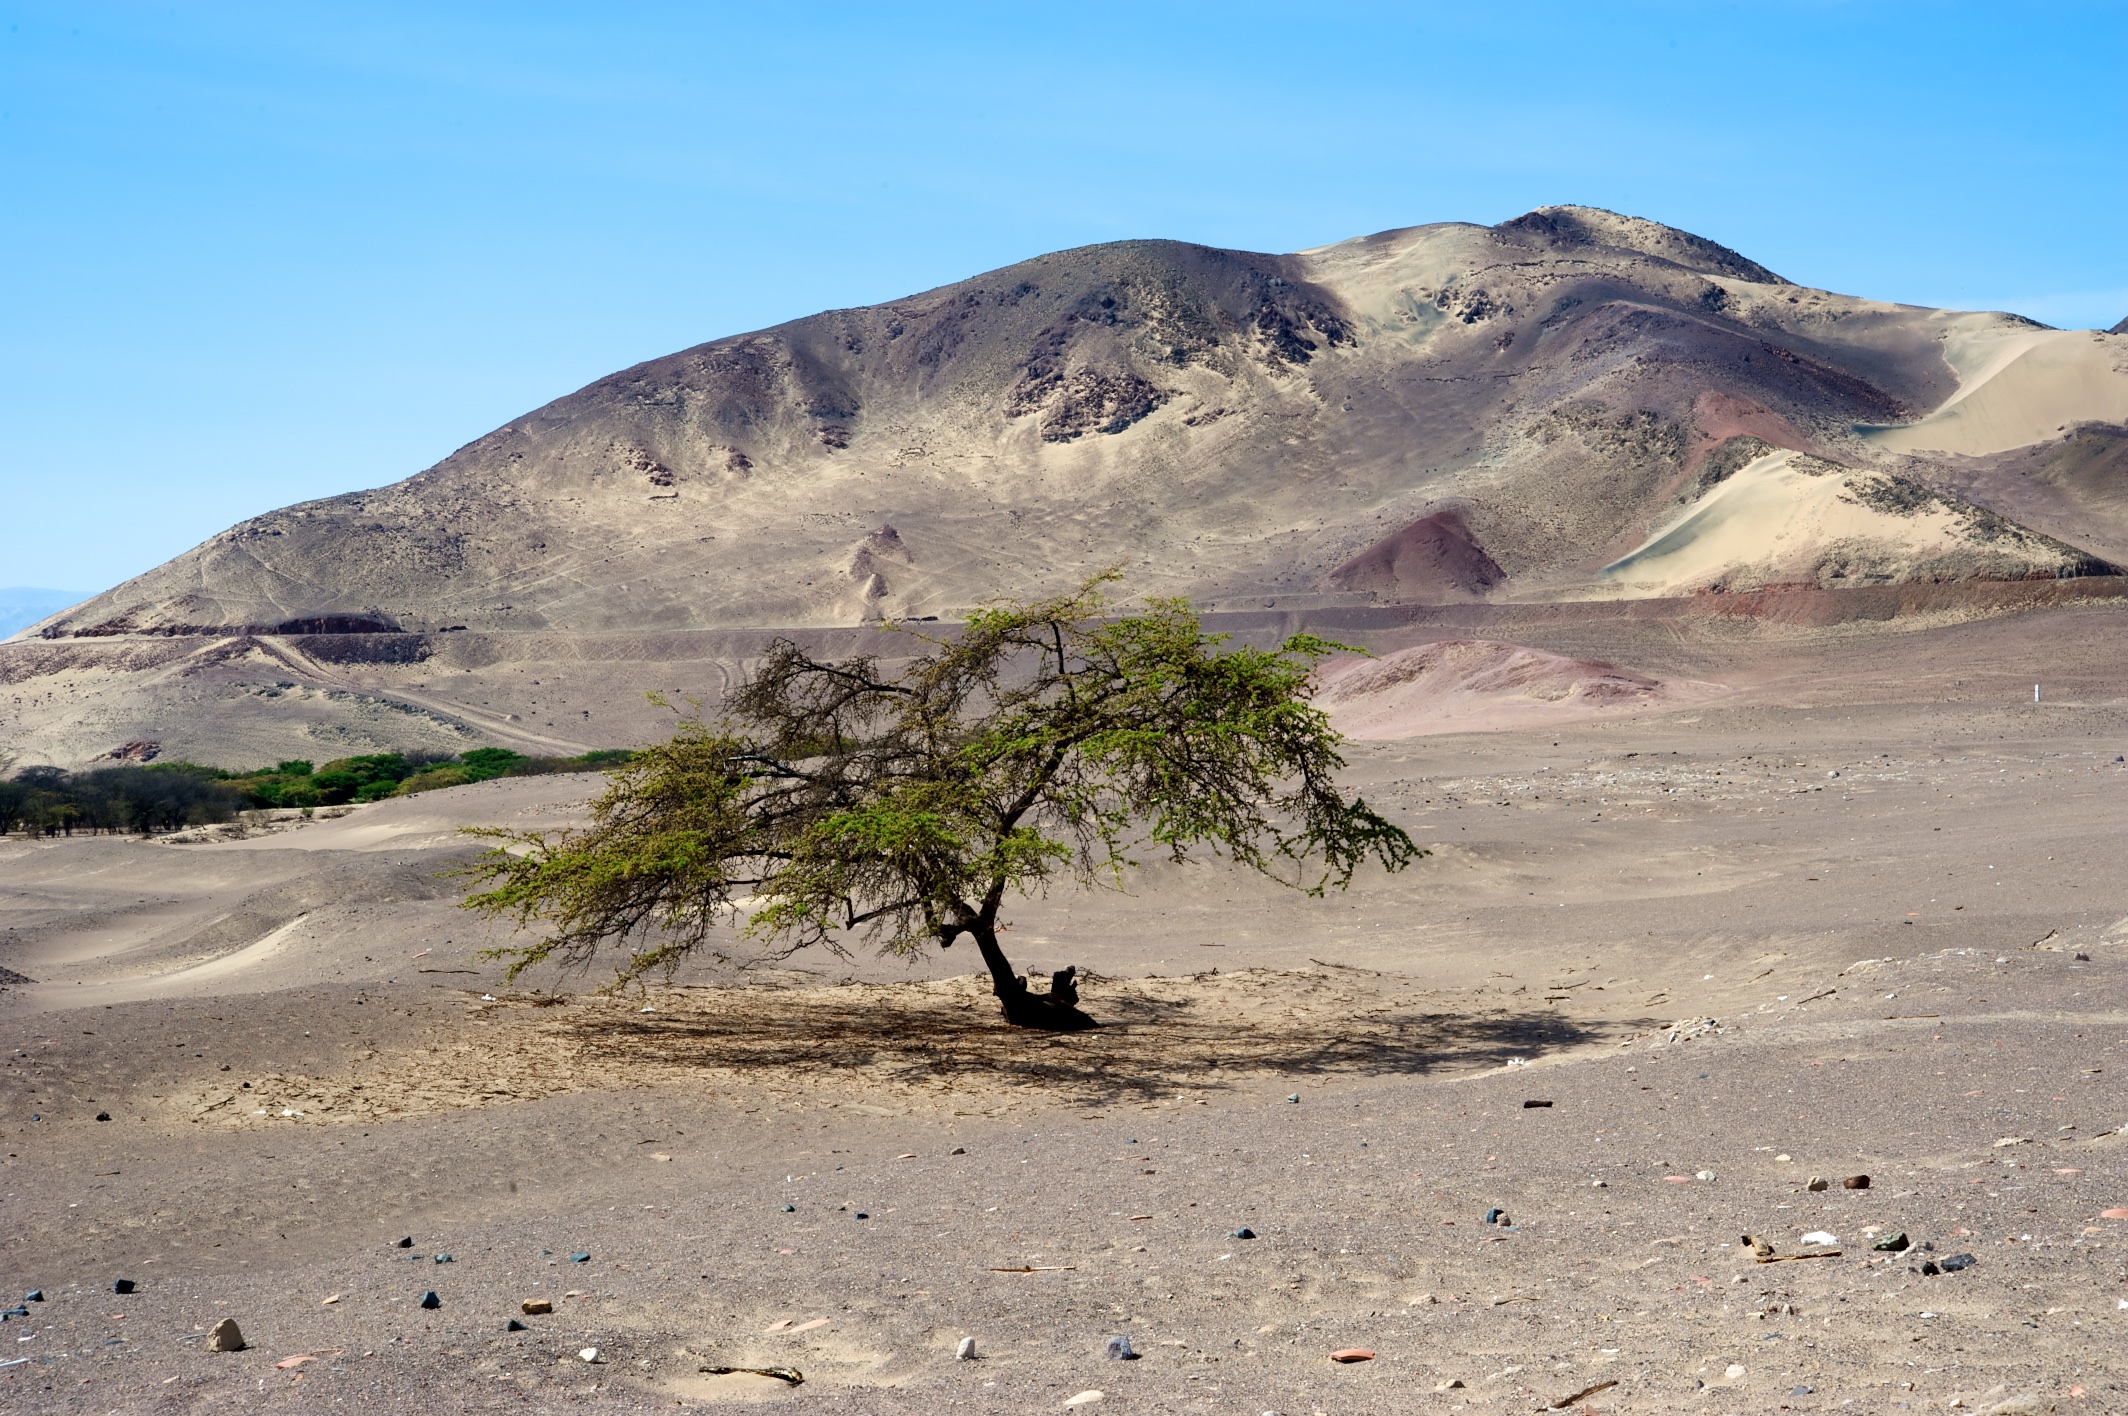  Tree in the desert, Cemetery, Nasca, Peru 